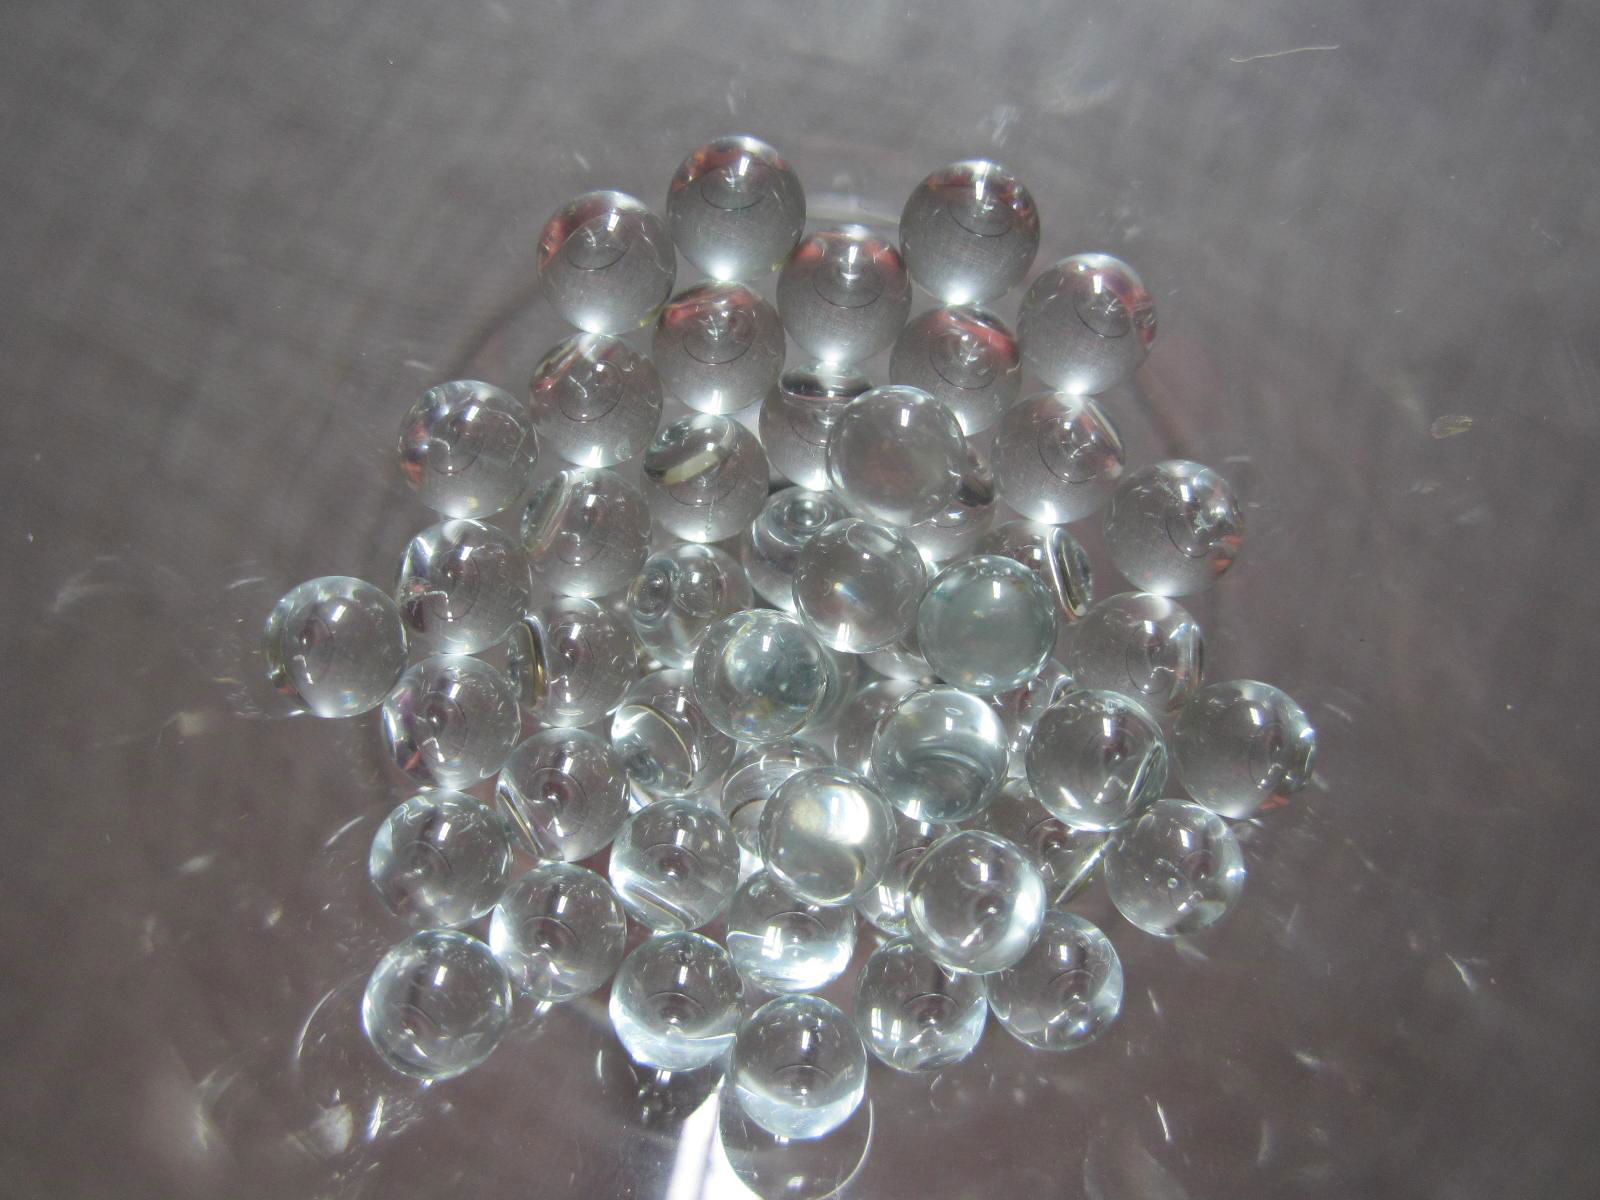 1.5mm-25.4mm Glass Ball- Soda Lime/ Borosilicate 